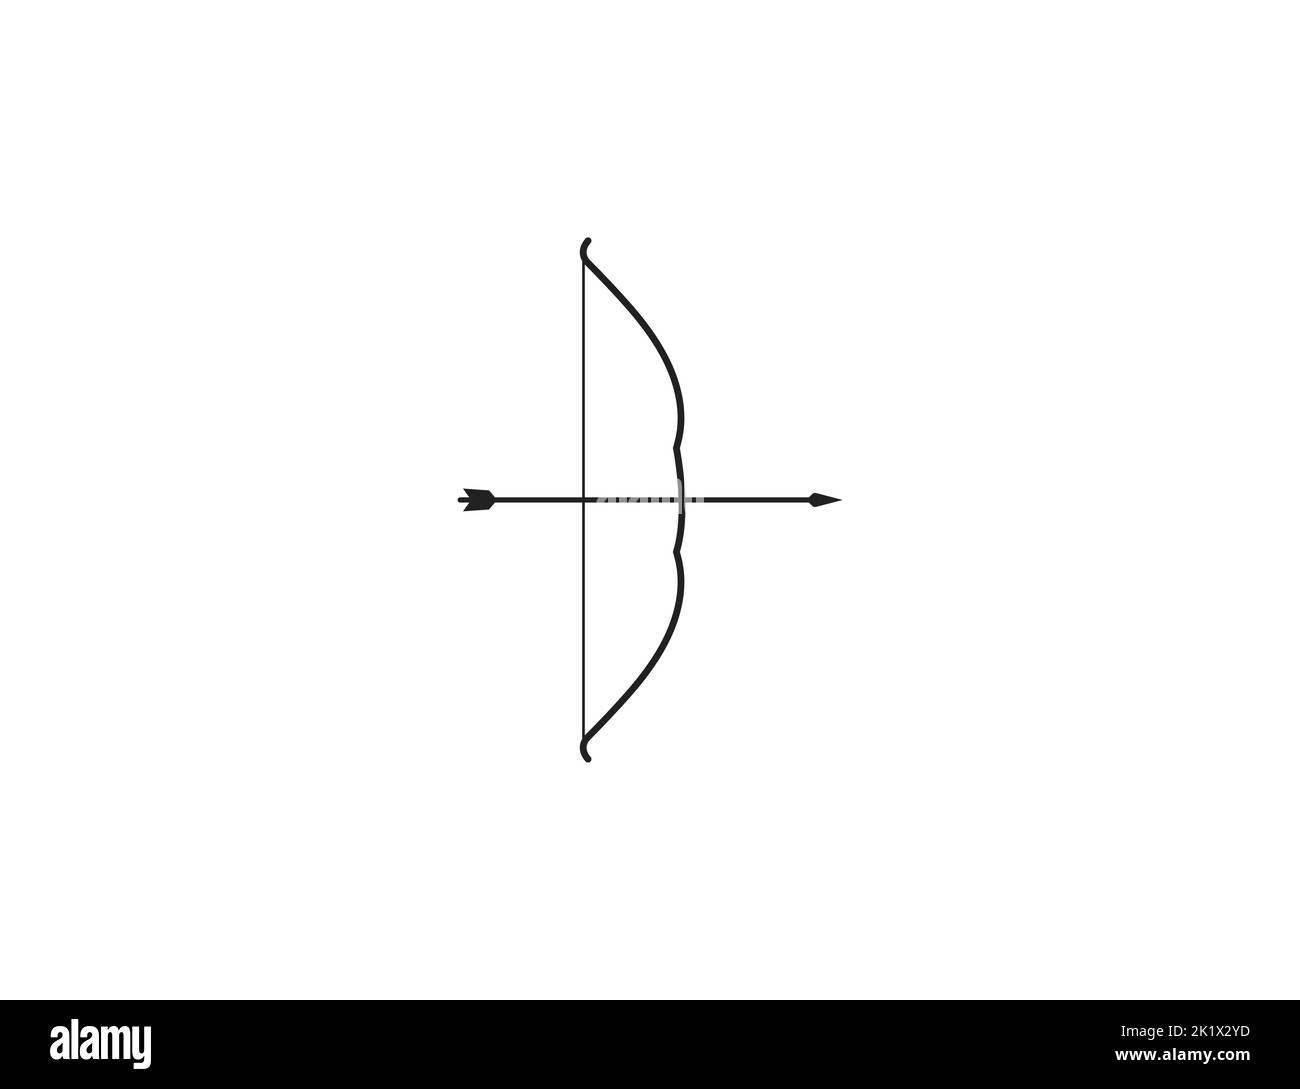 Vector illustration. Archery bow arrow icon Stock Vector